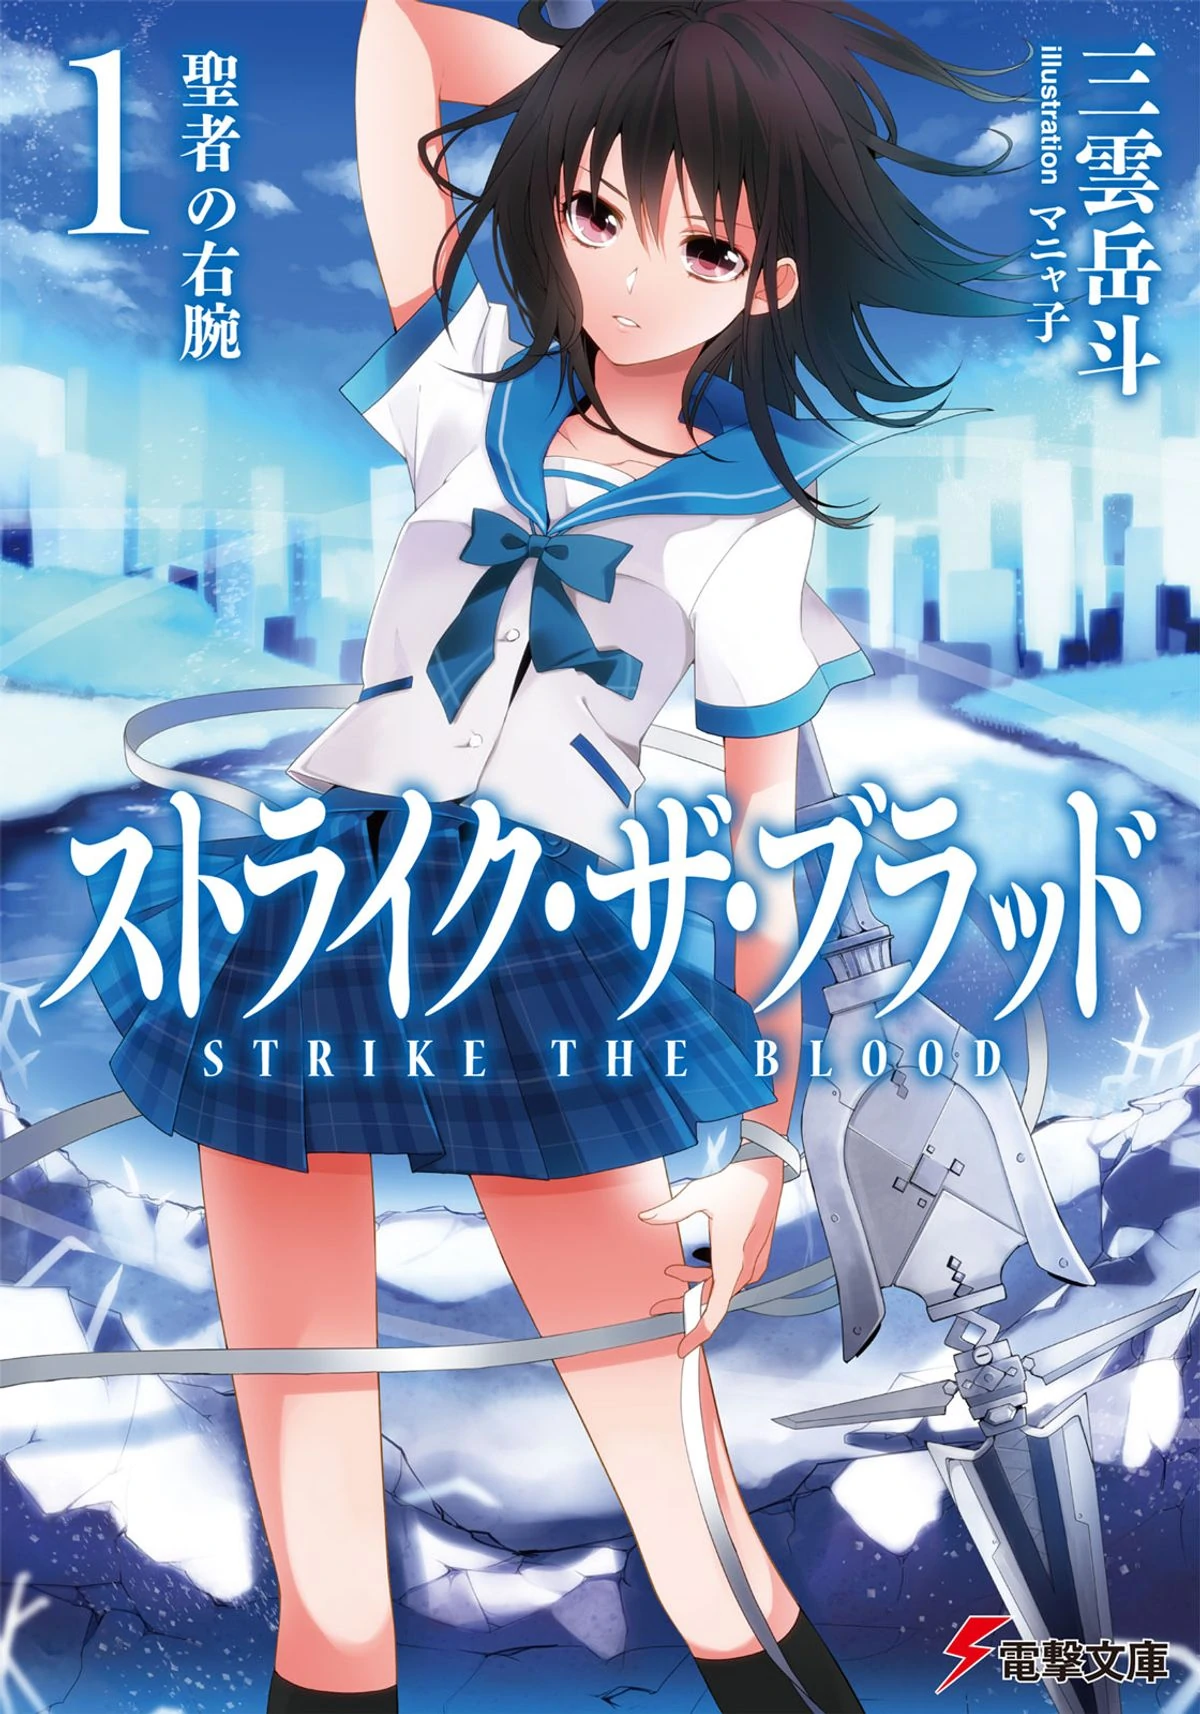 Strike the Blood Review - Anime Evo